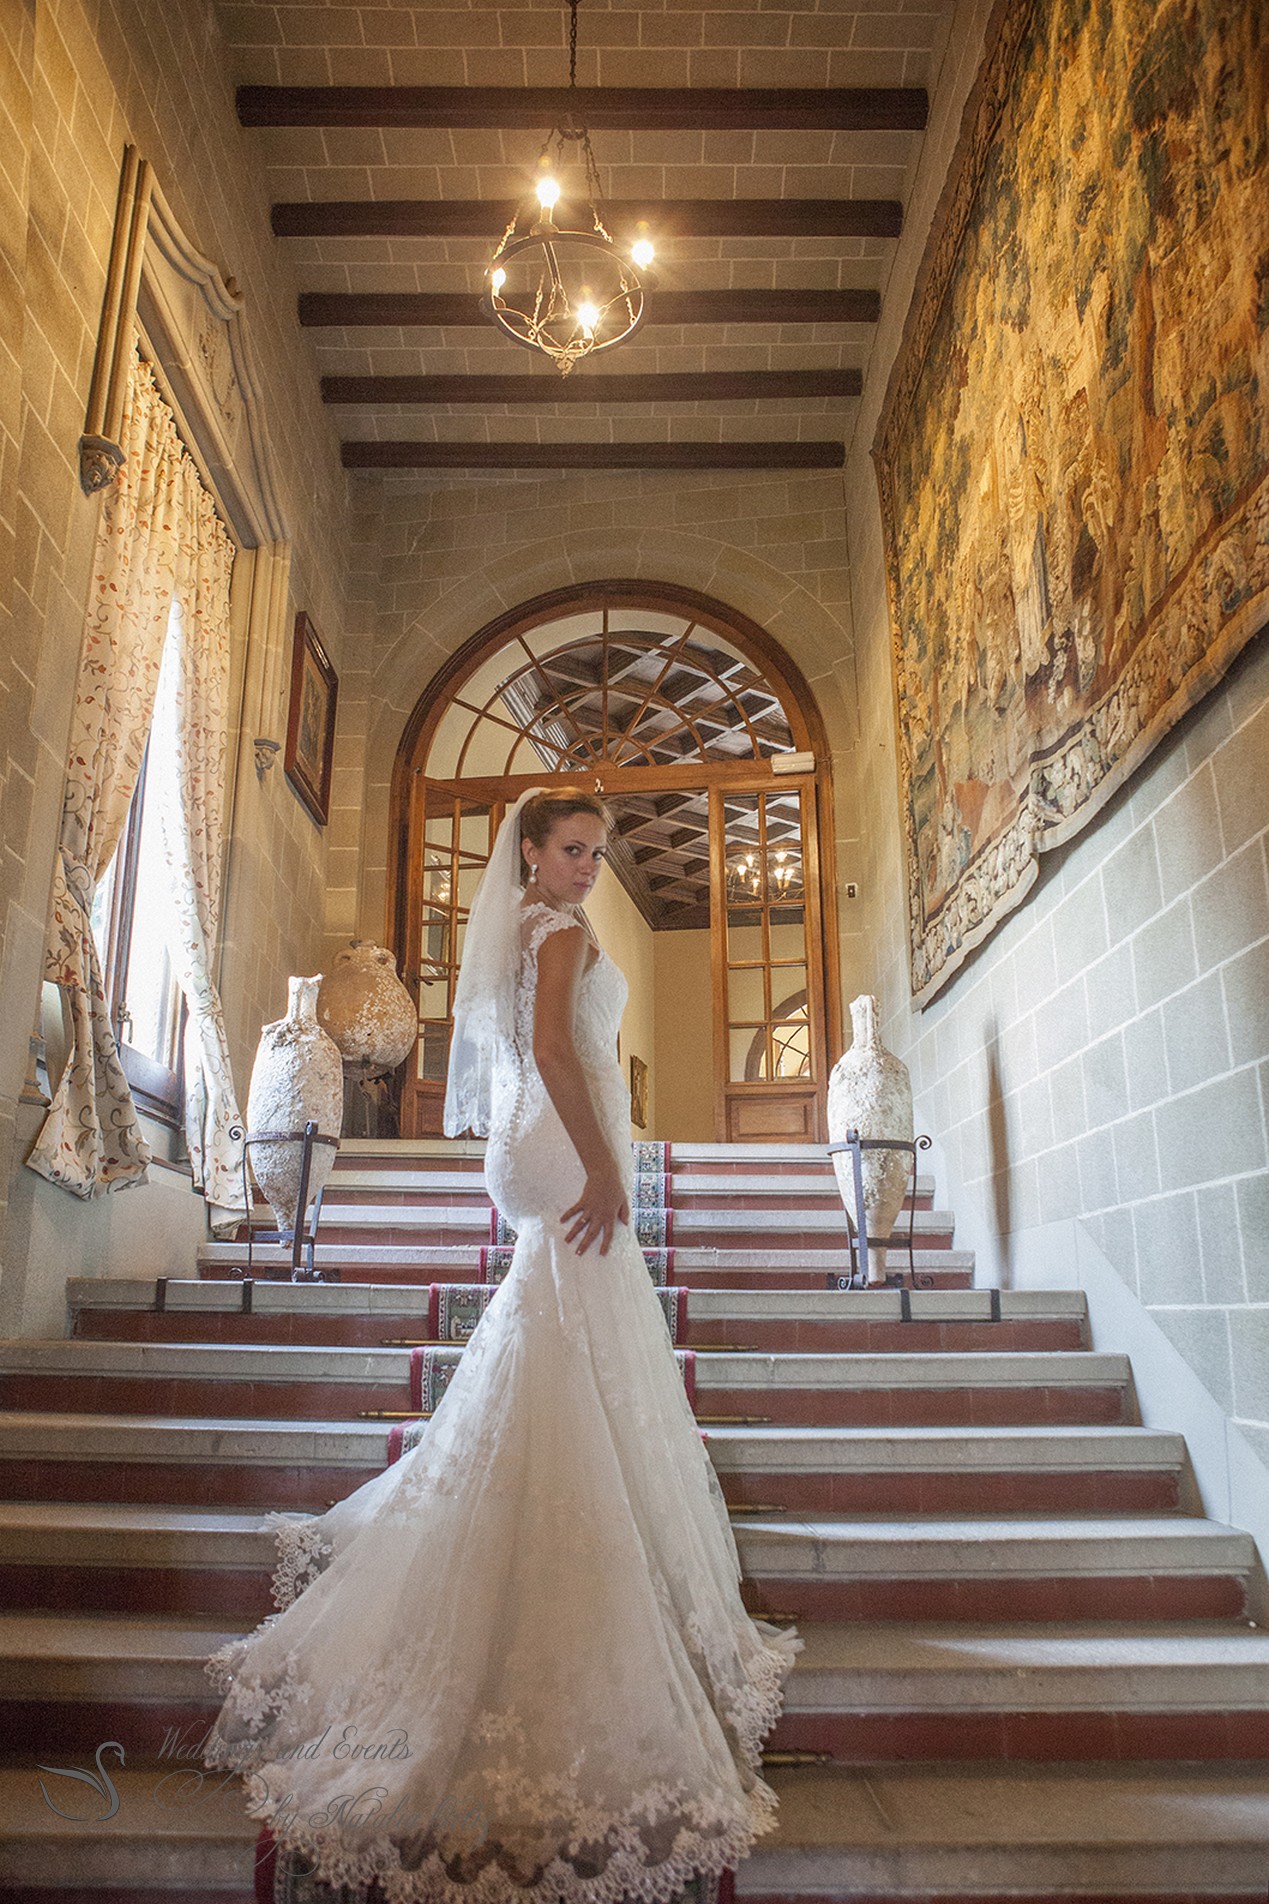 9 reasons to celebrate wedding in the Spanish castle La Baronia